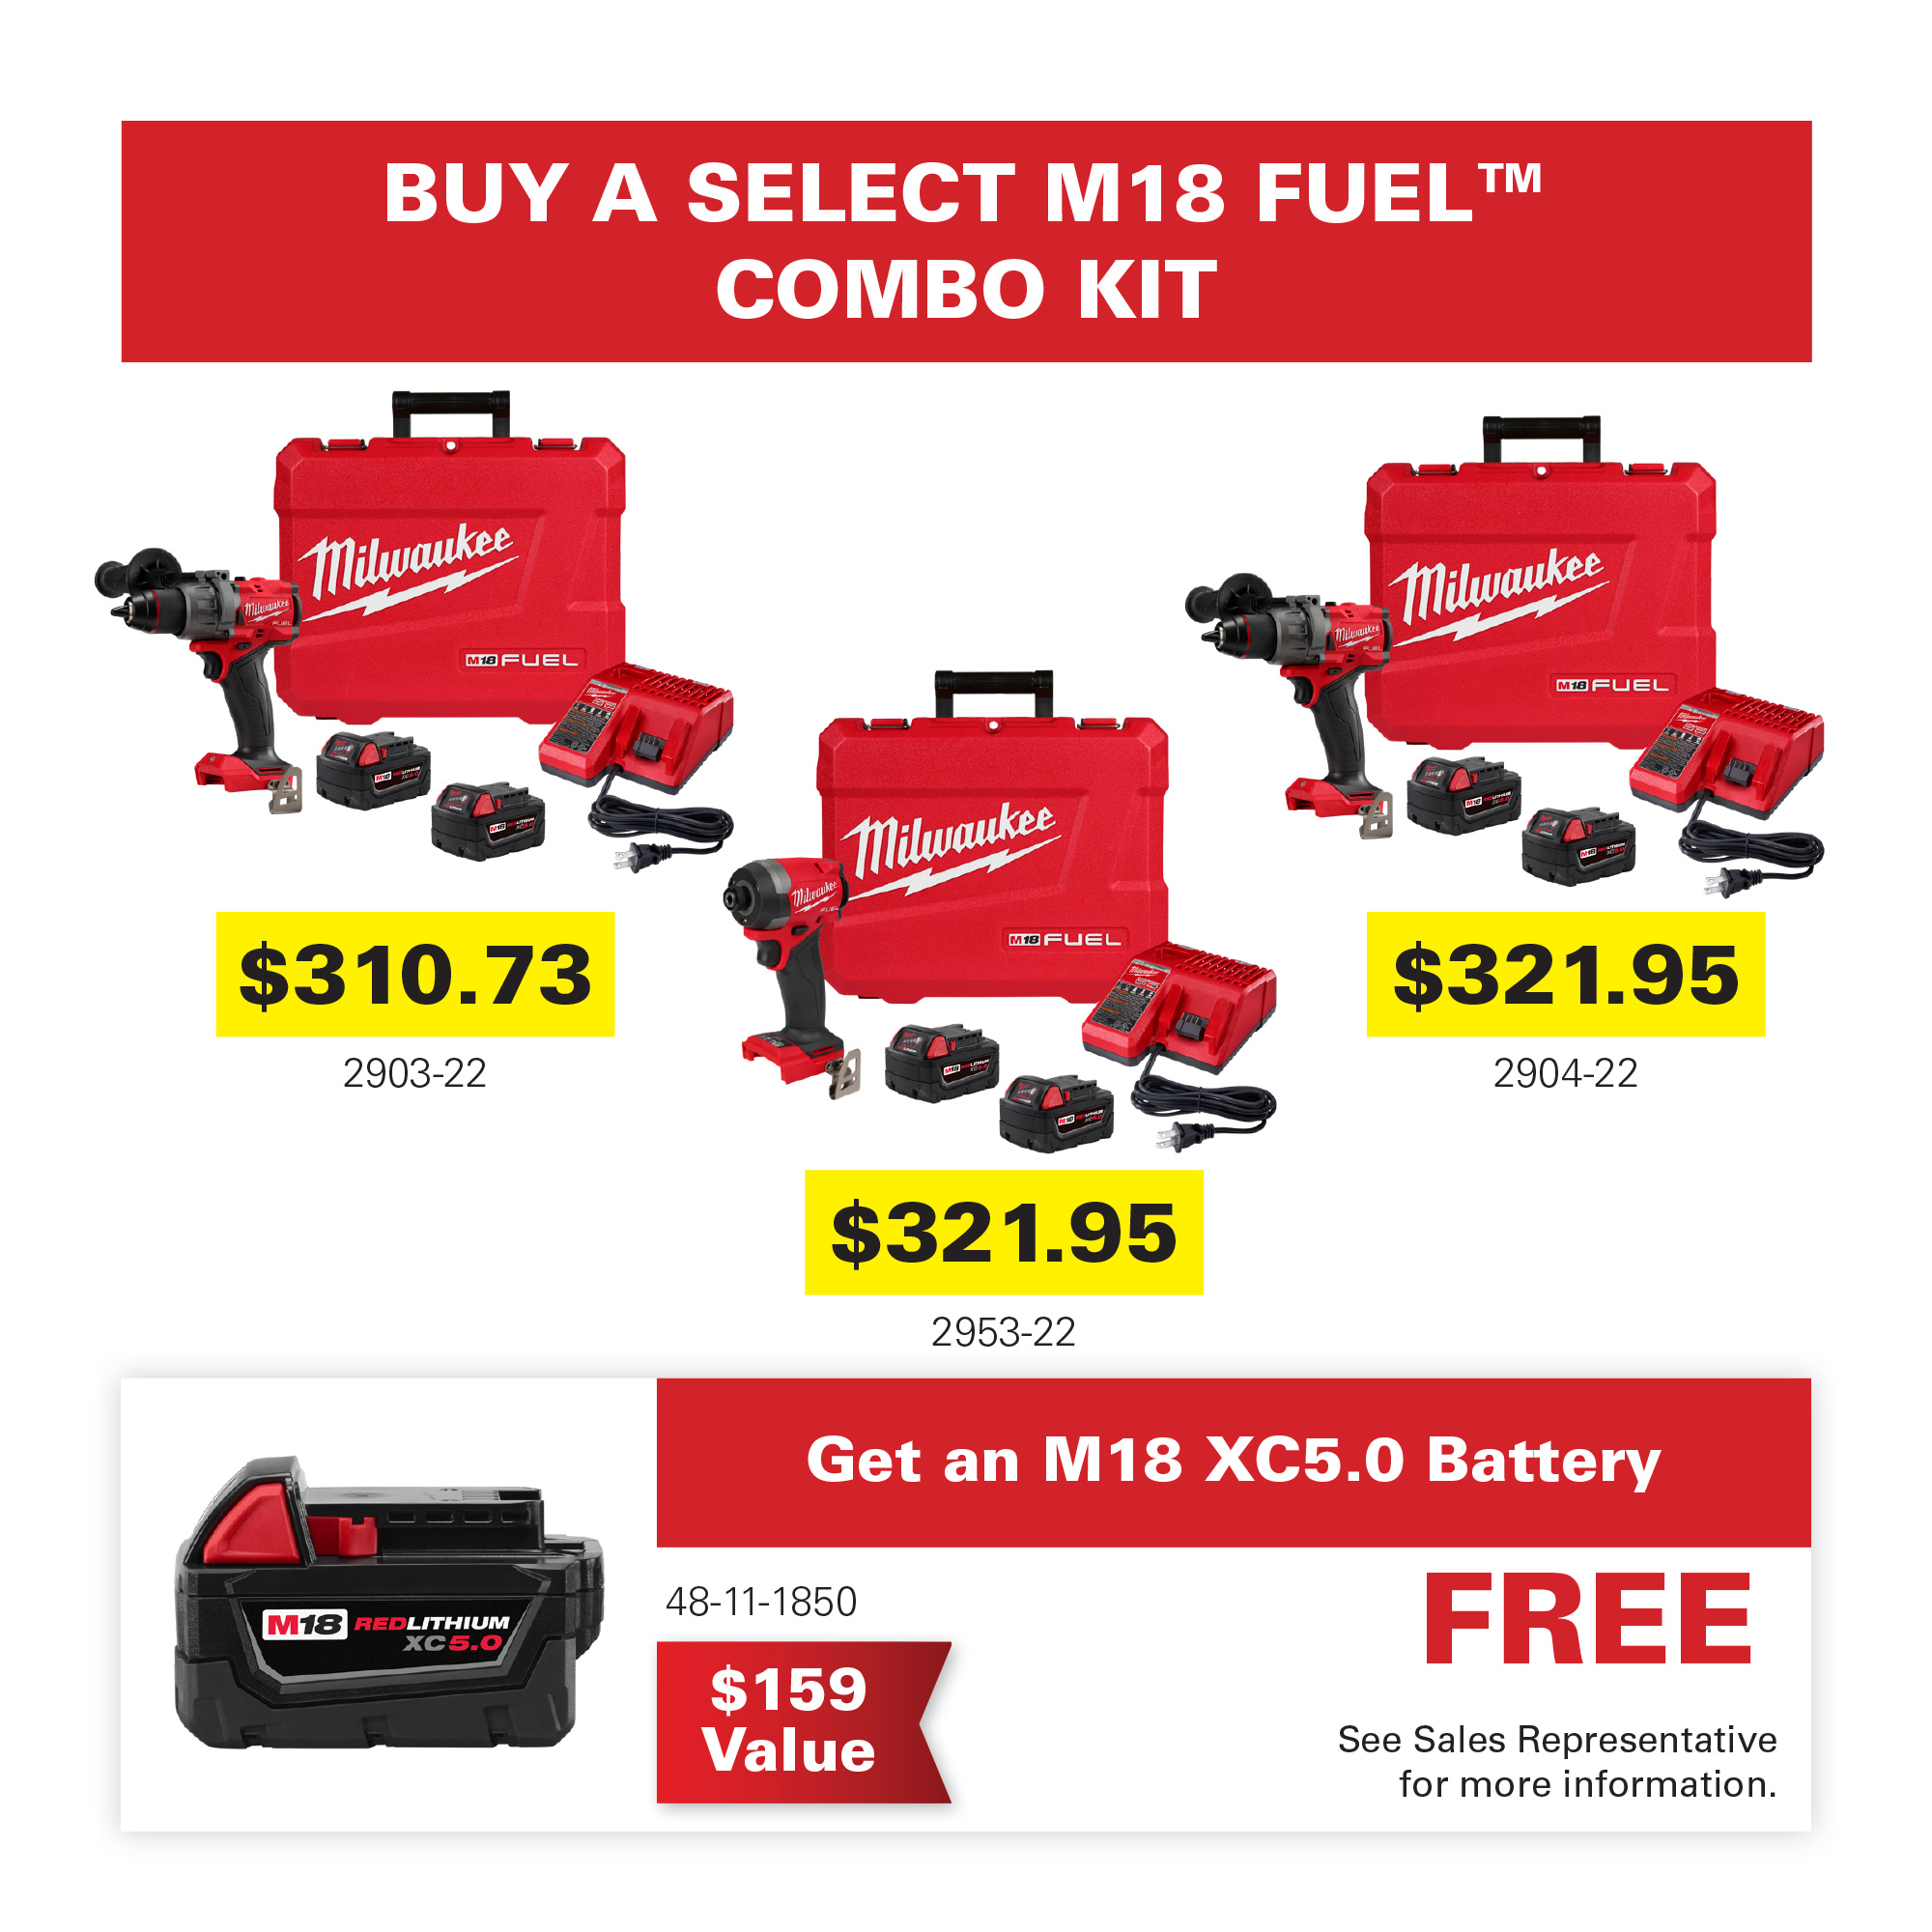 Milwaukee M18 Fuel Combo Kit Promo